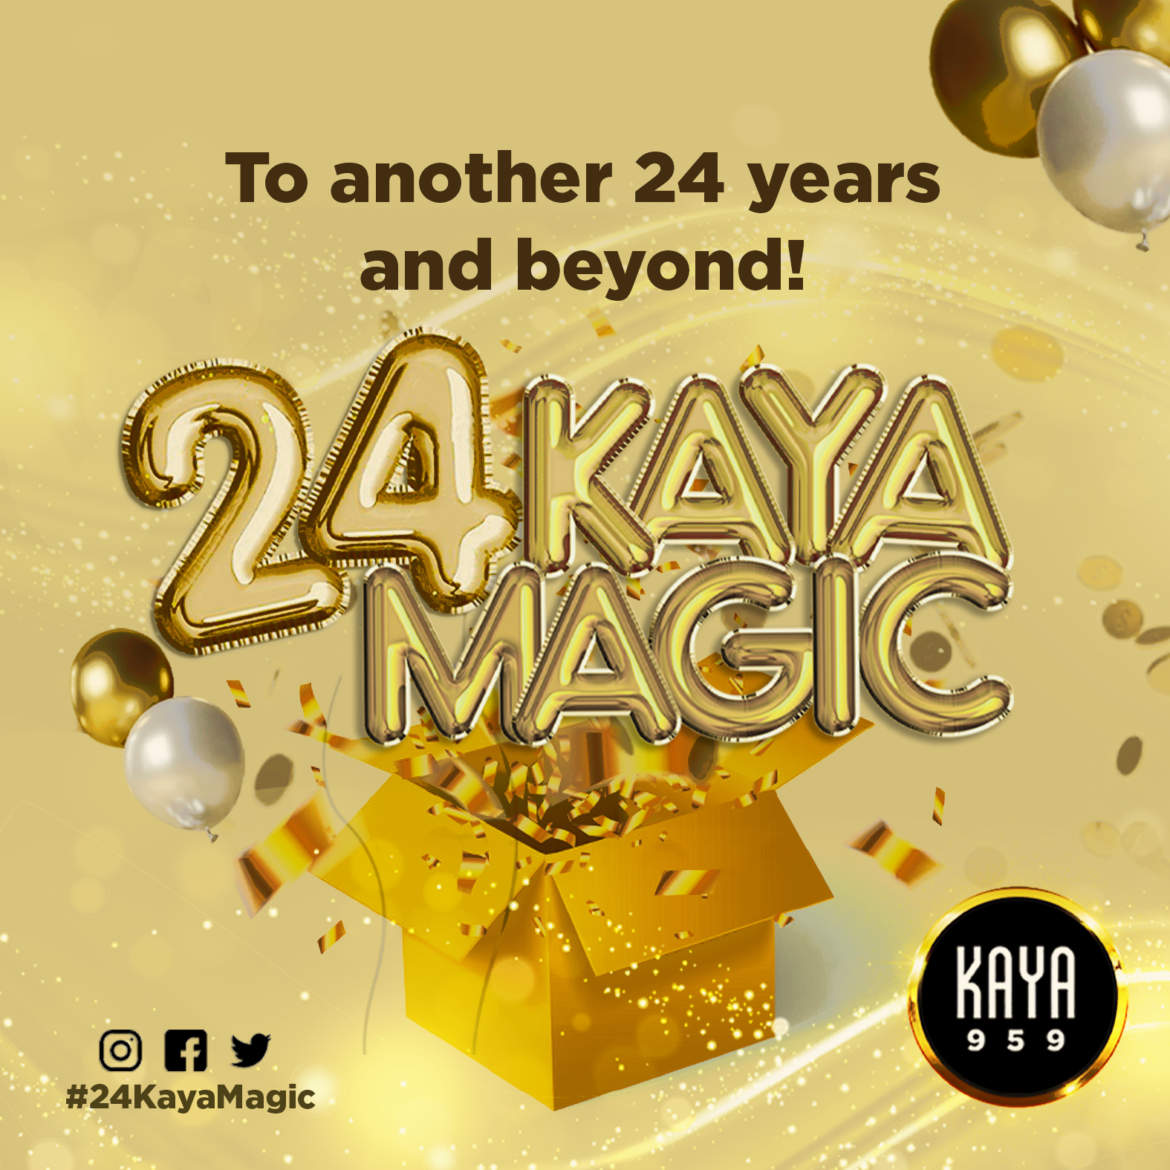 Kaya Magic Memorable moments